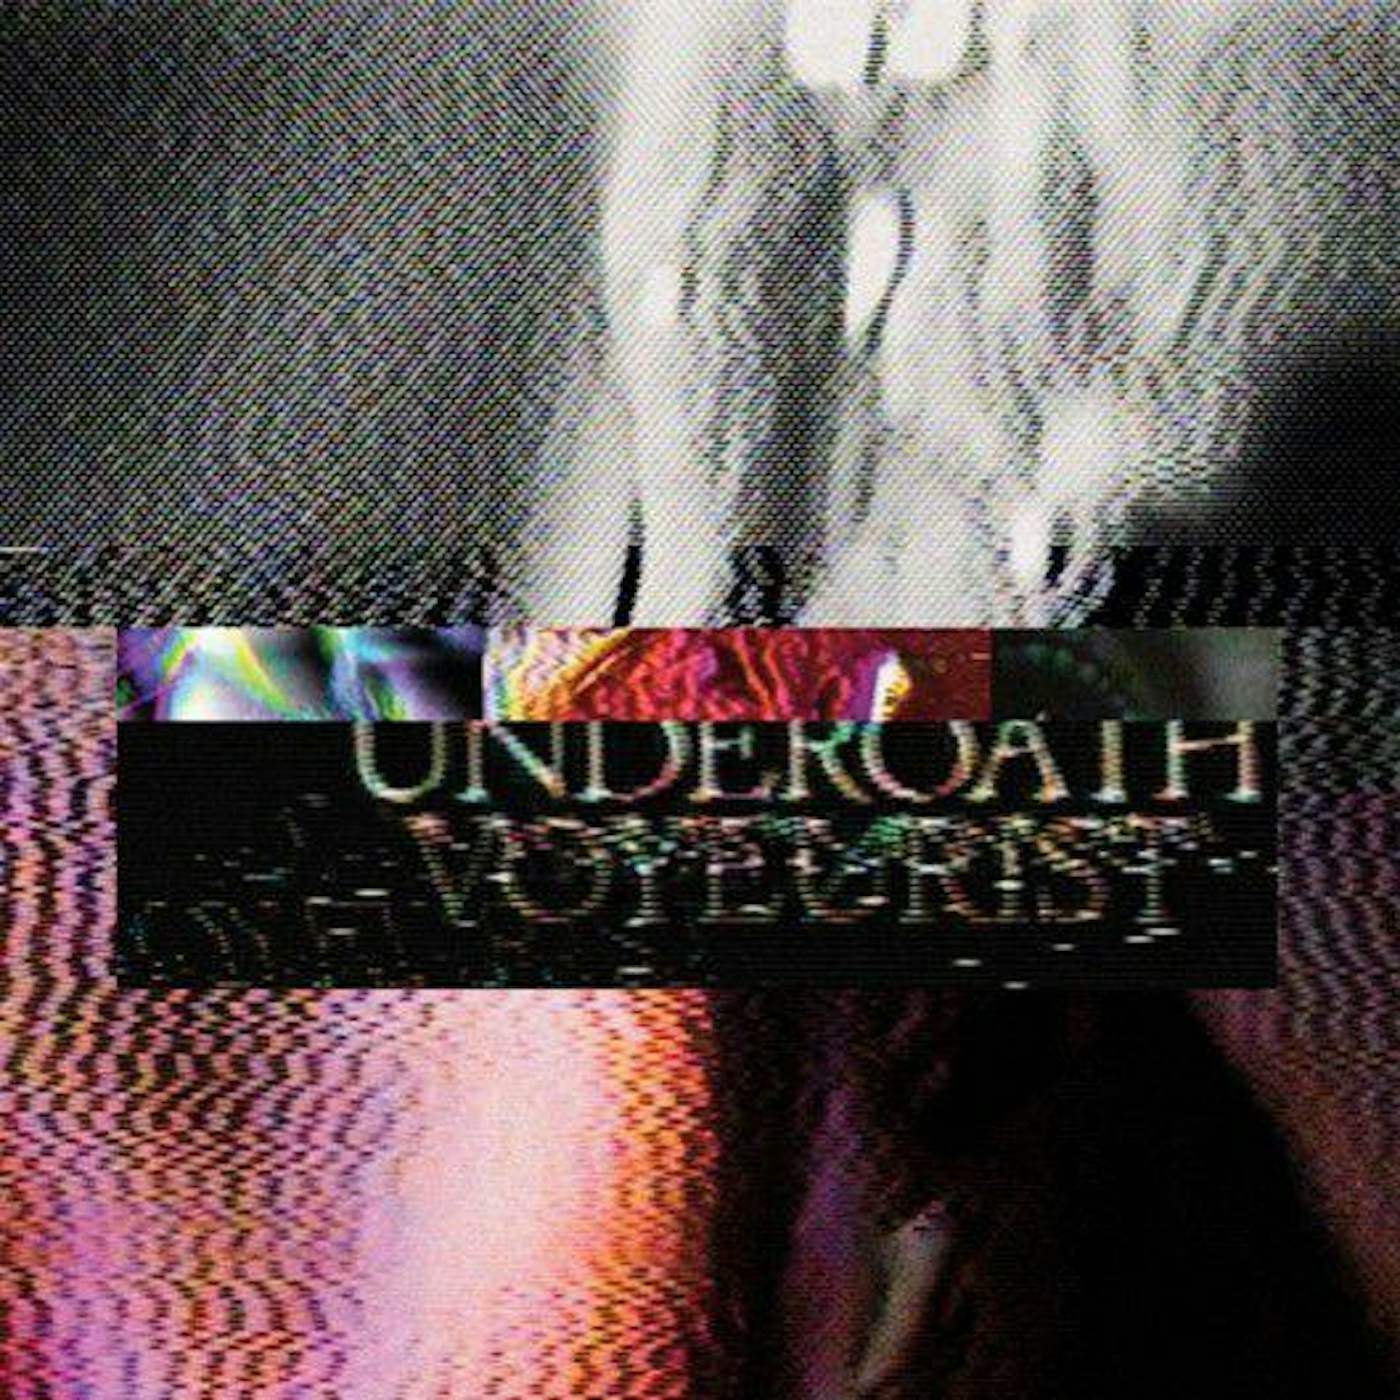 Underoath Voyeurist (coloured vinyl) limited vinyl record